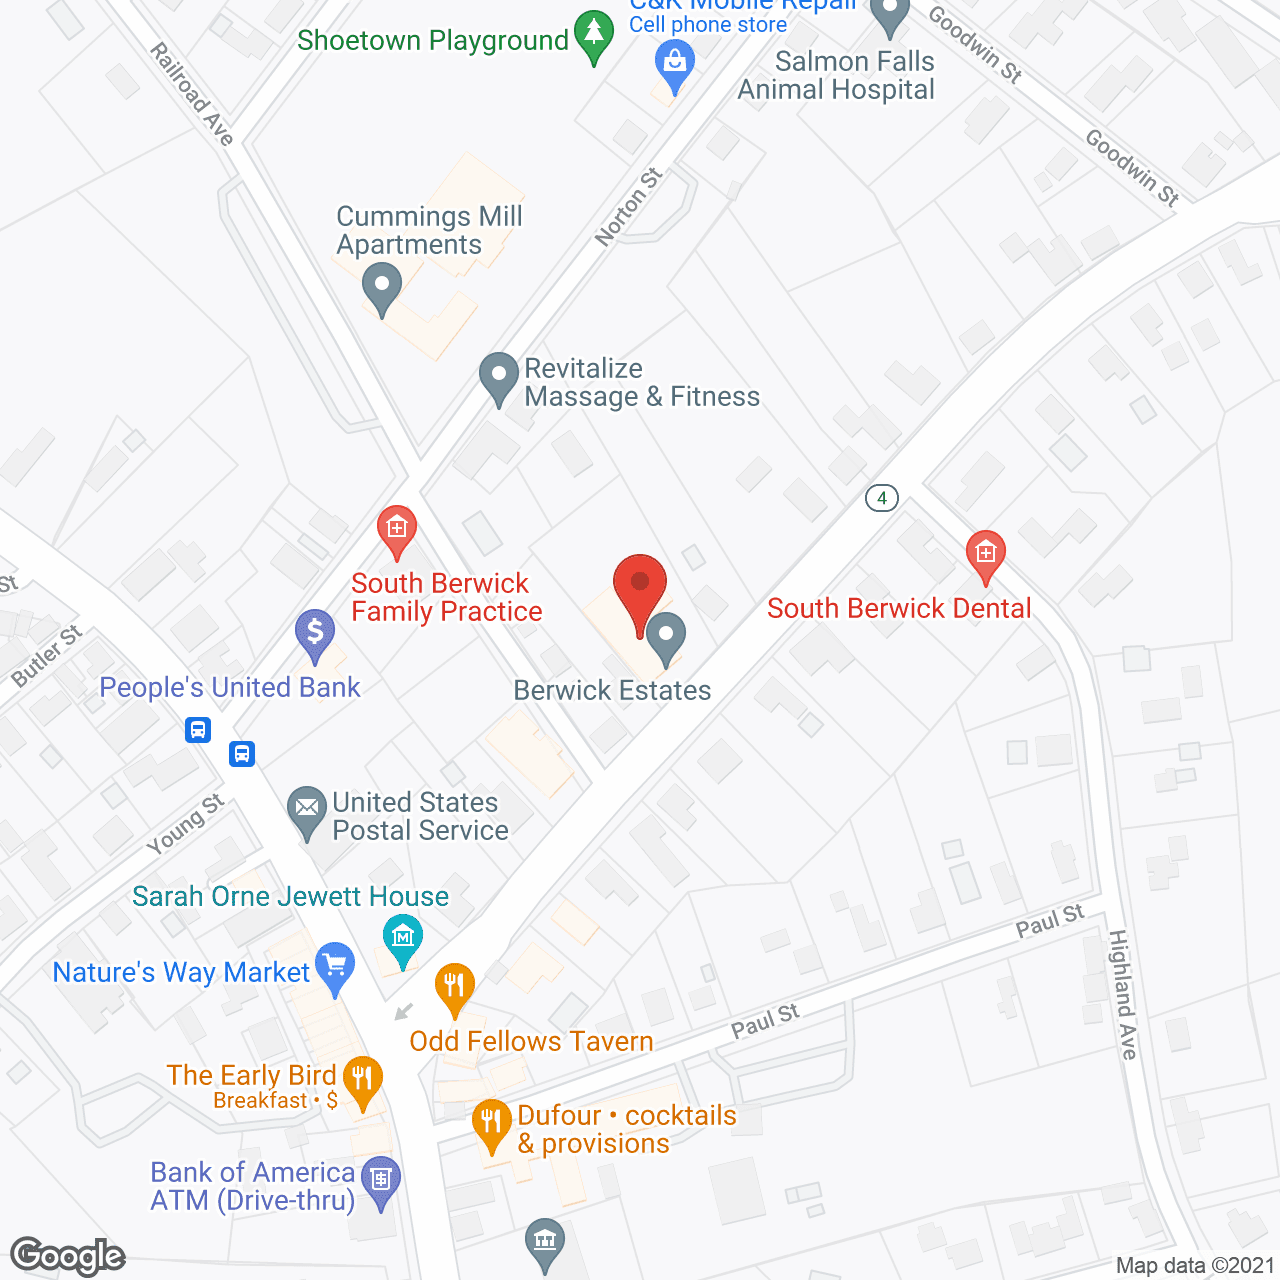 Berwick Estates in google map